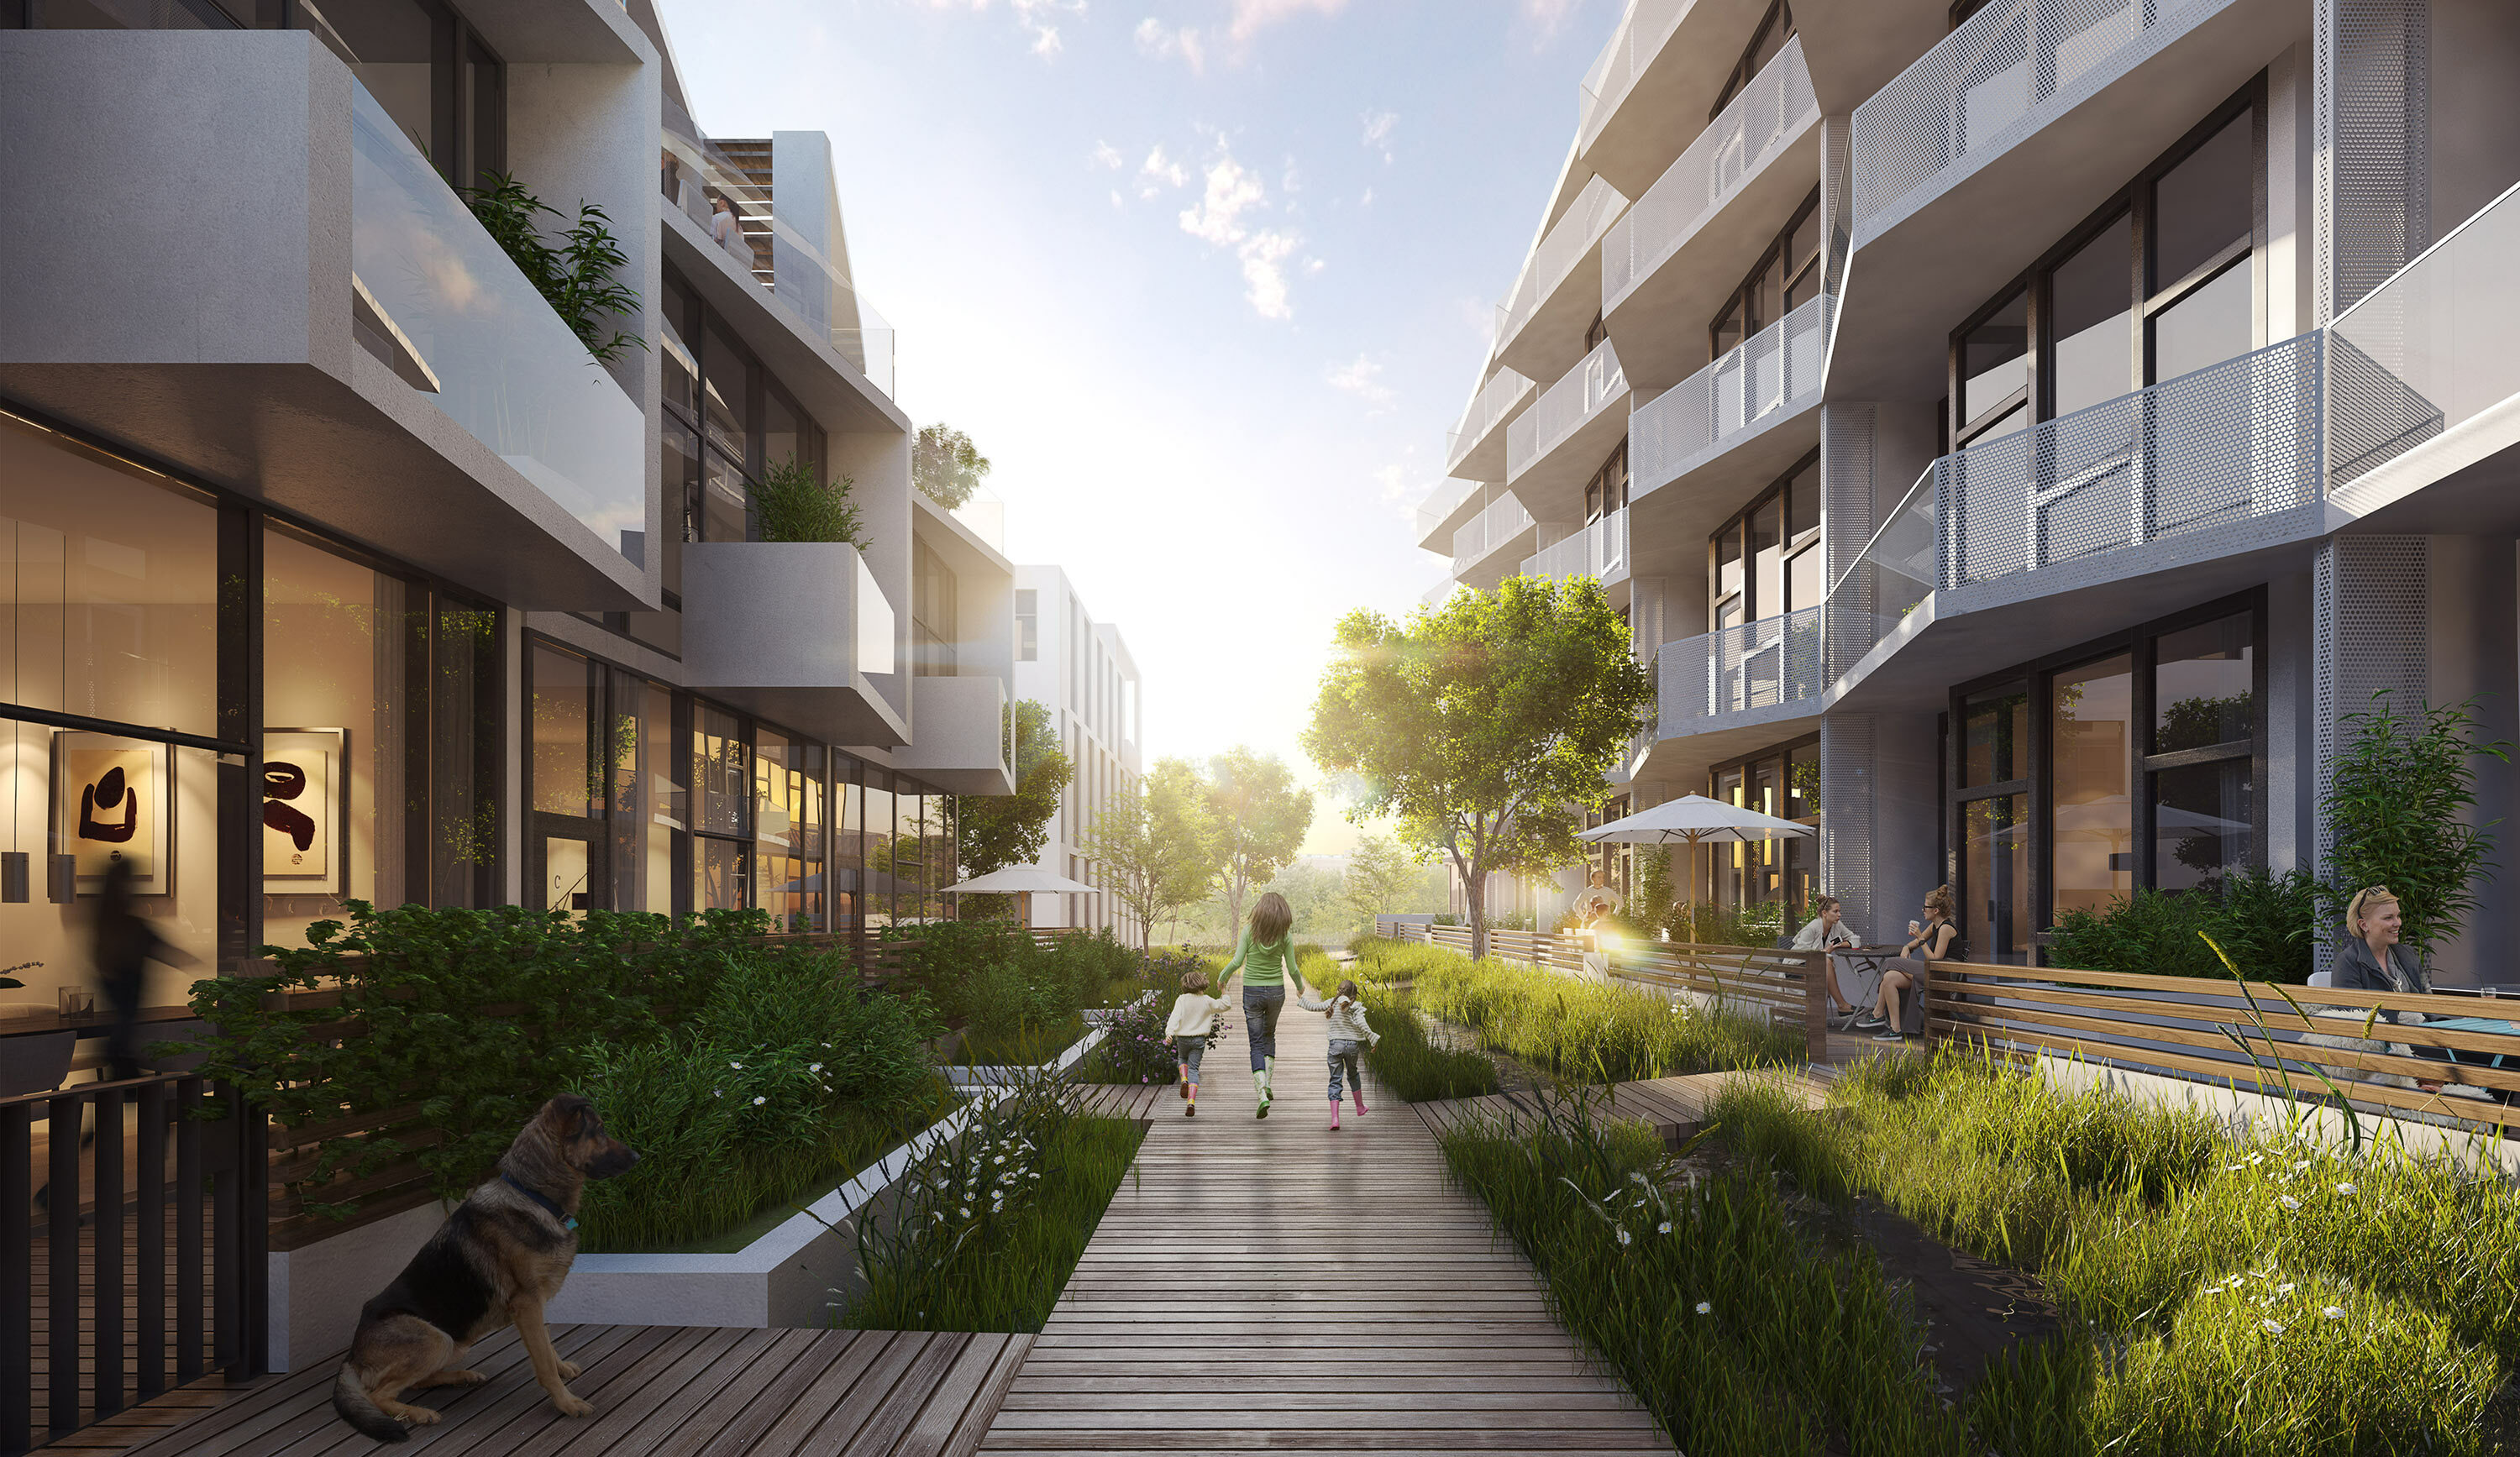 5 apartments walkway foliage riverline development hoerrschaudt